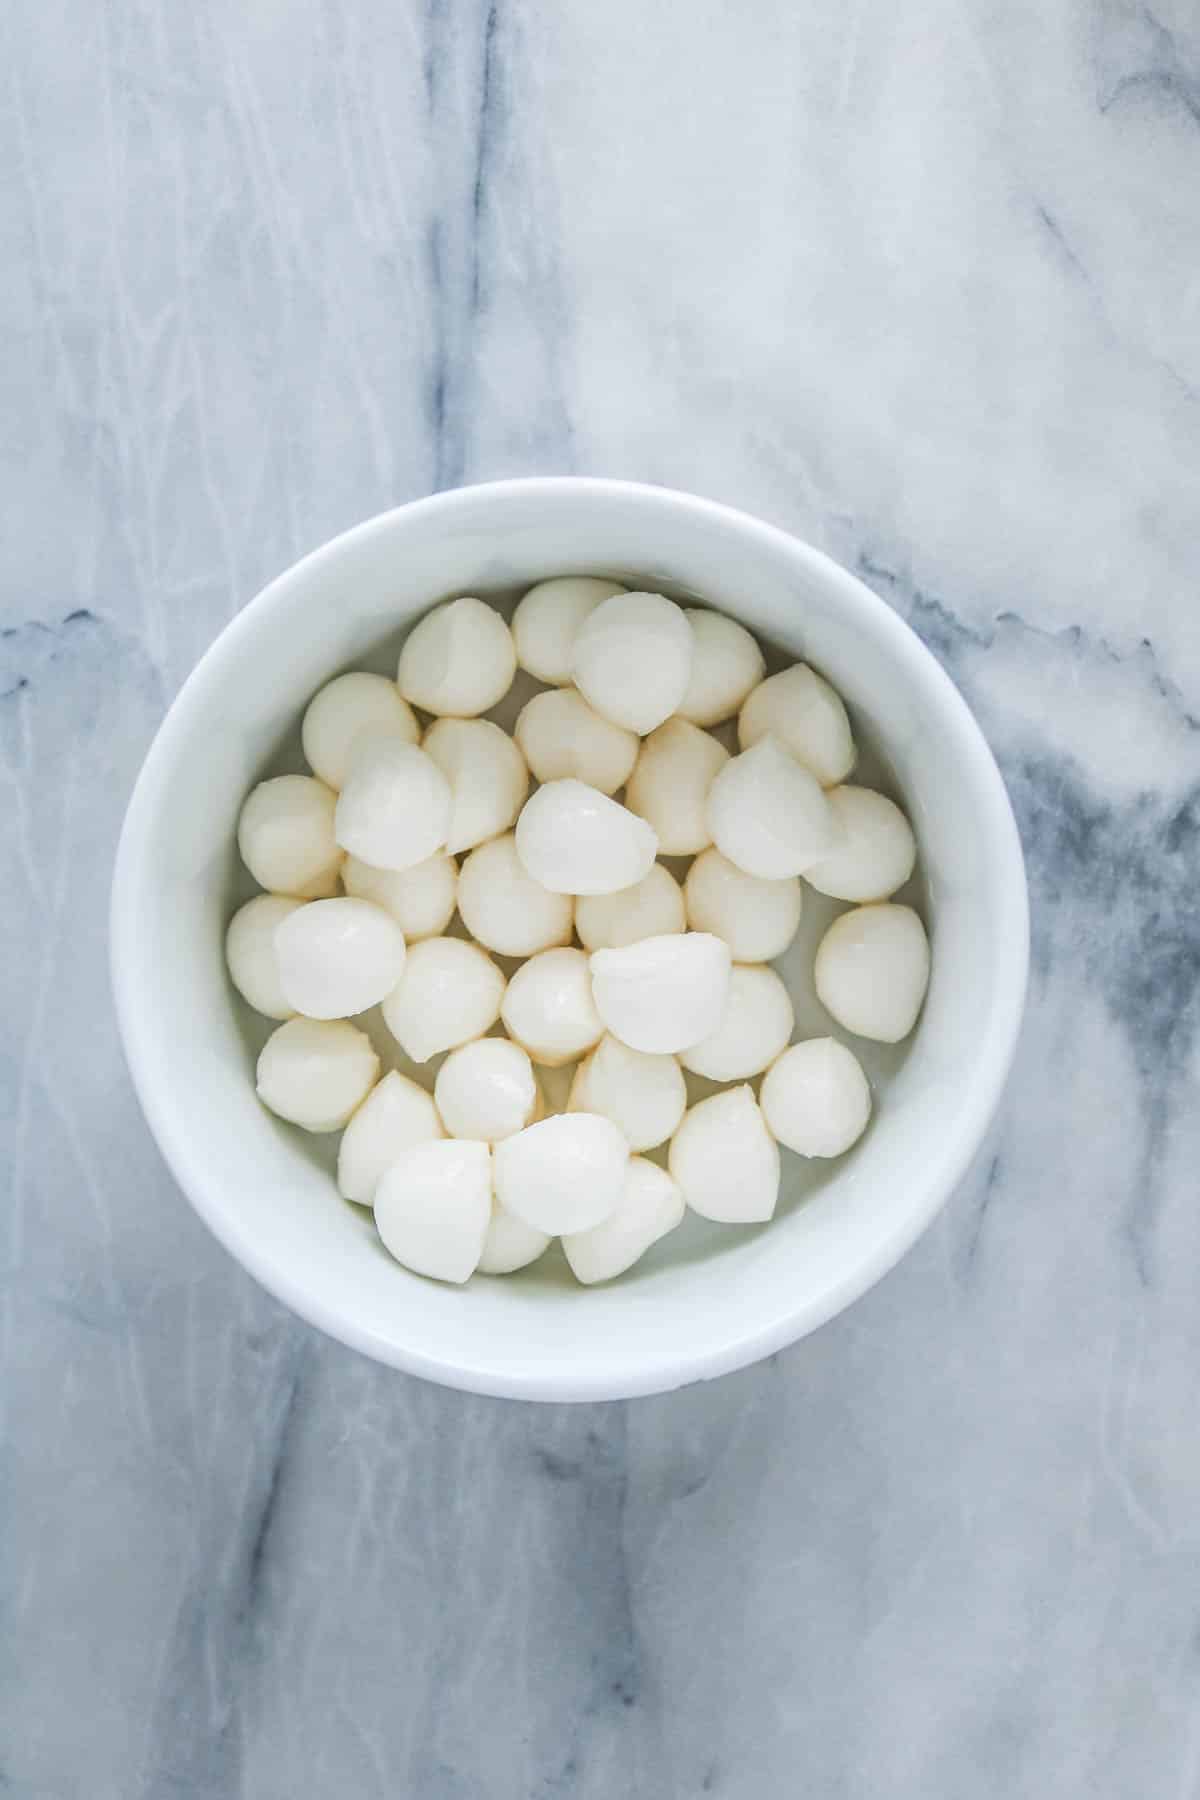 Bocconcini in a white bowl.